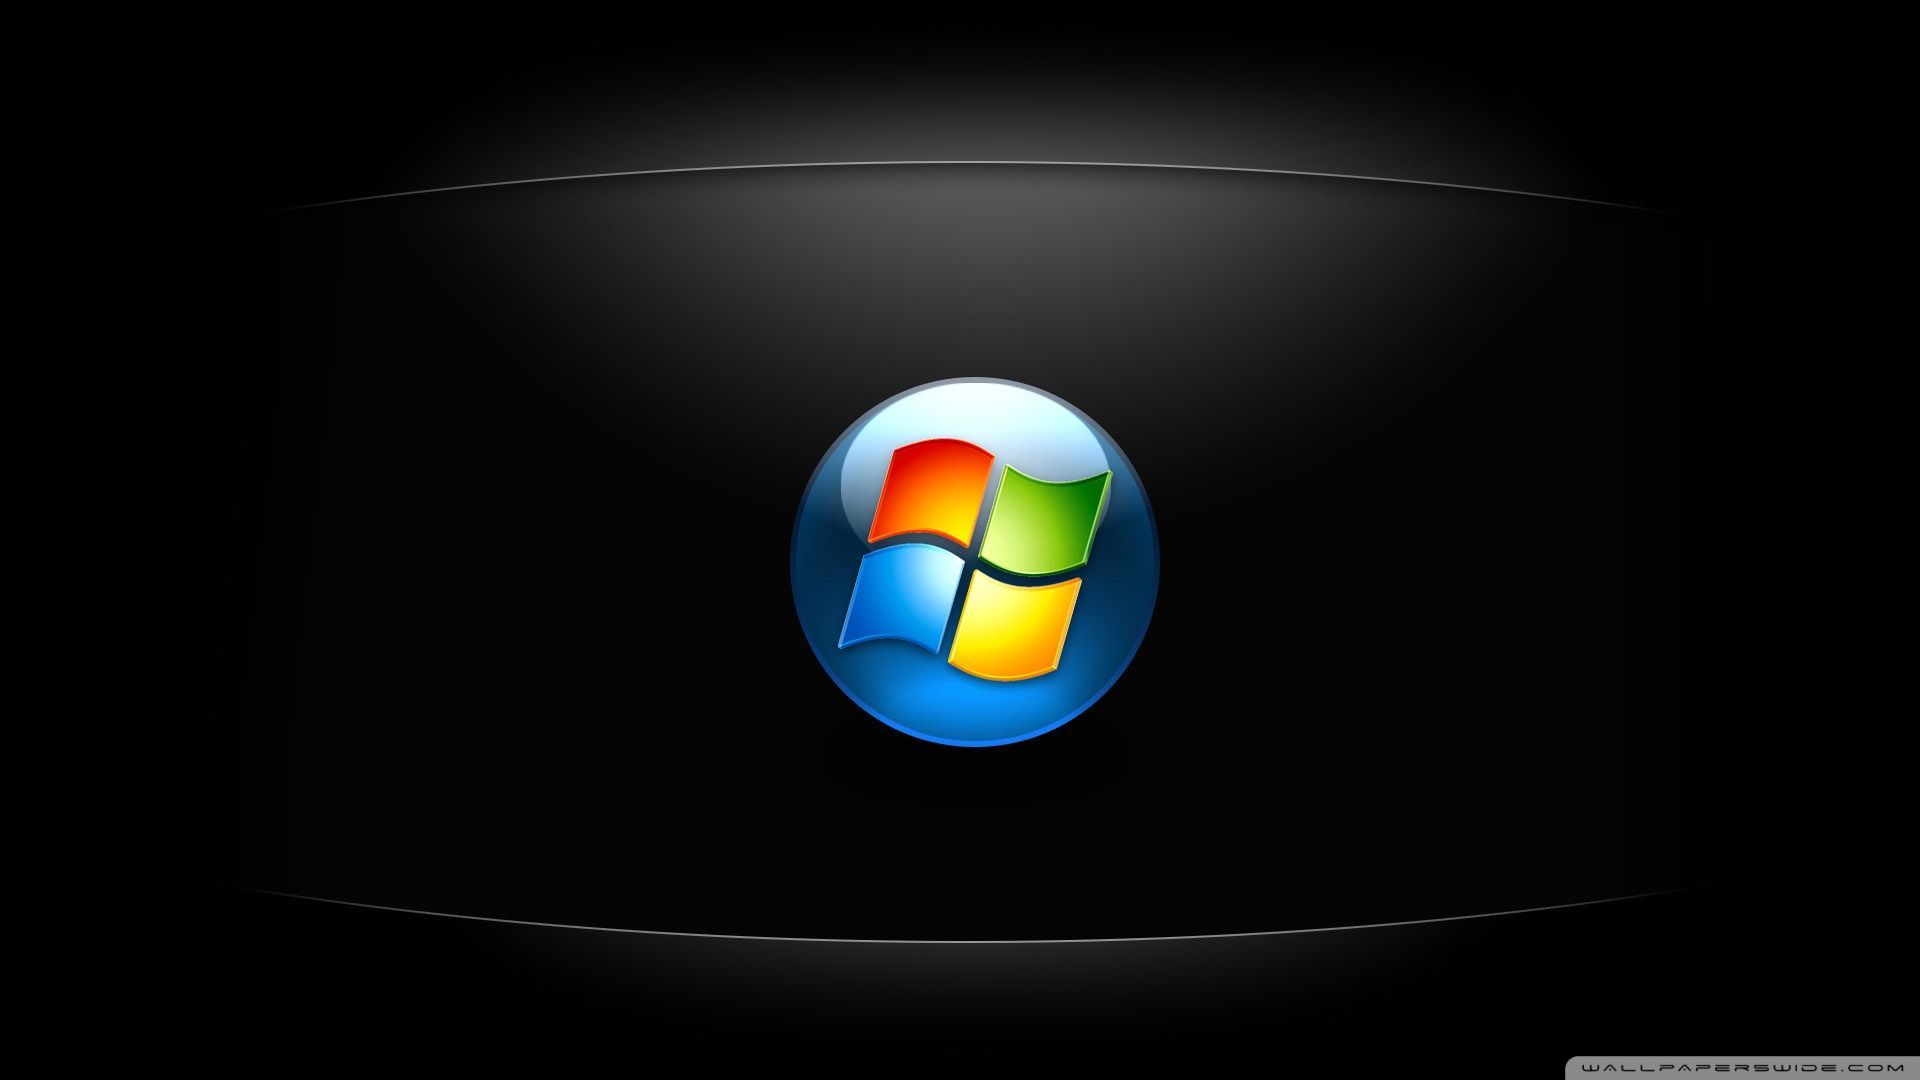 Windows 1920x1080 Widescreen Background Wallpapers 3014 - HD